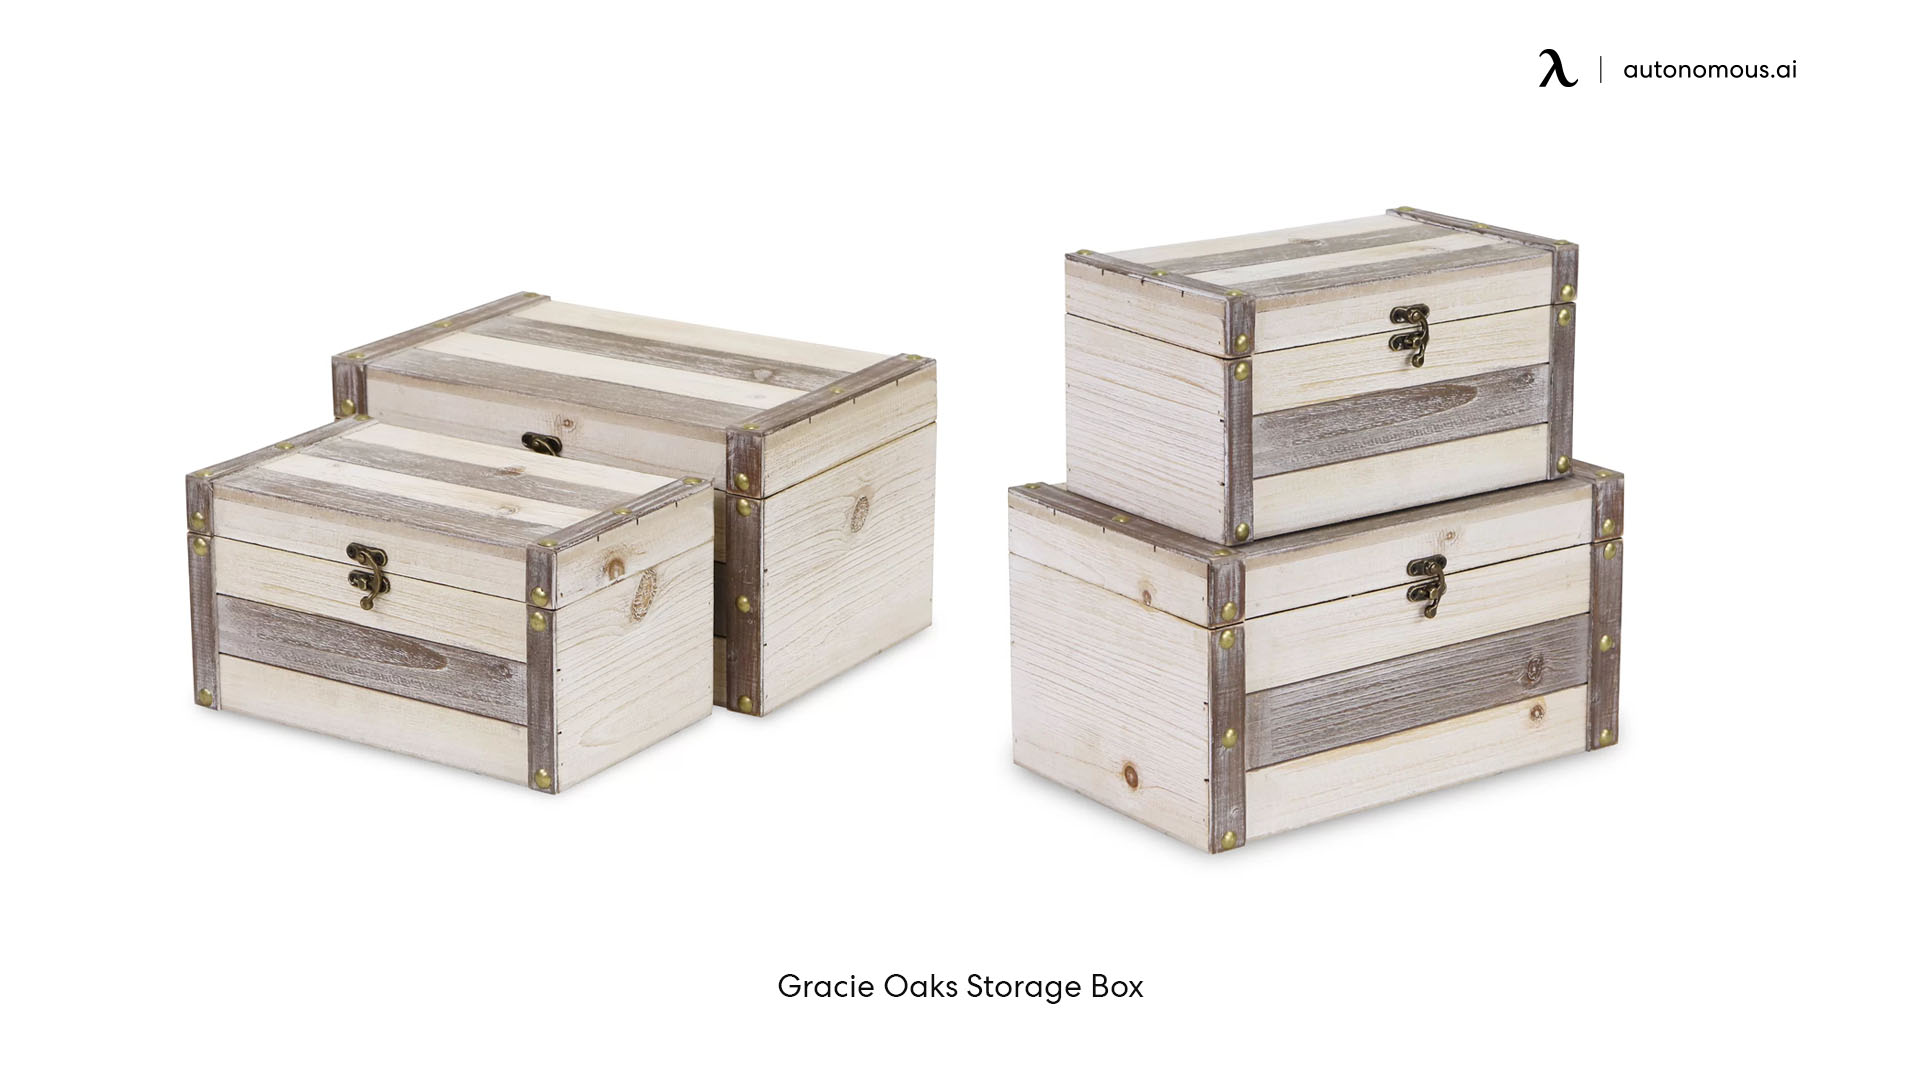 Gracie Oaks Storage Box bamboo desk organizer